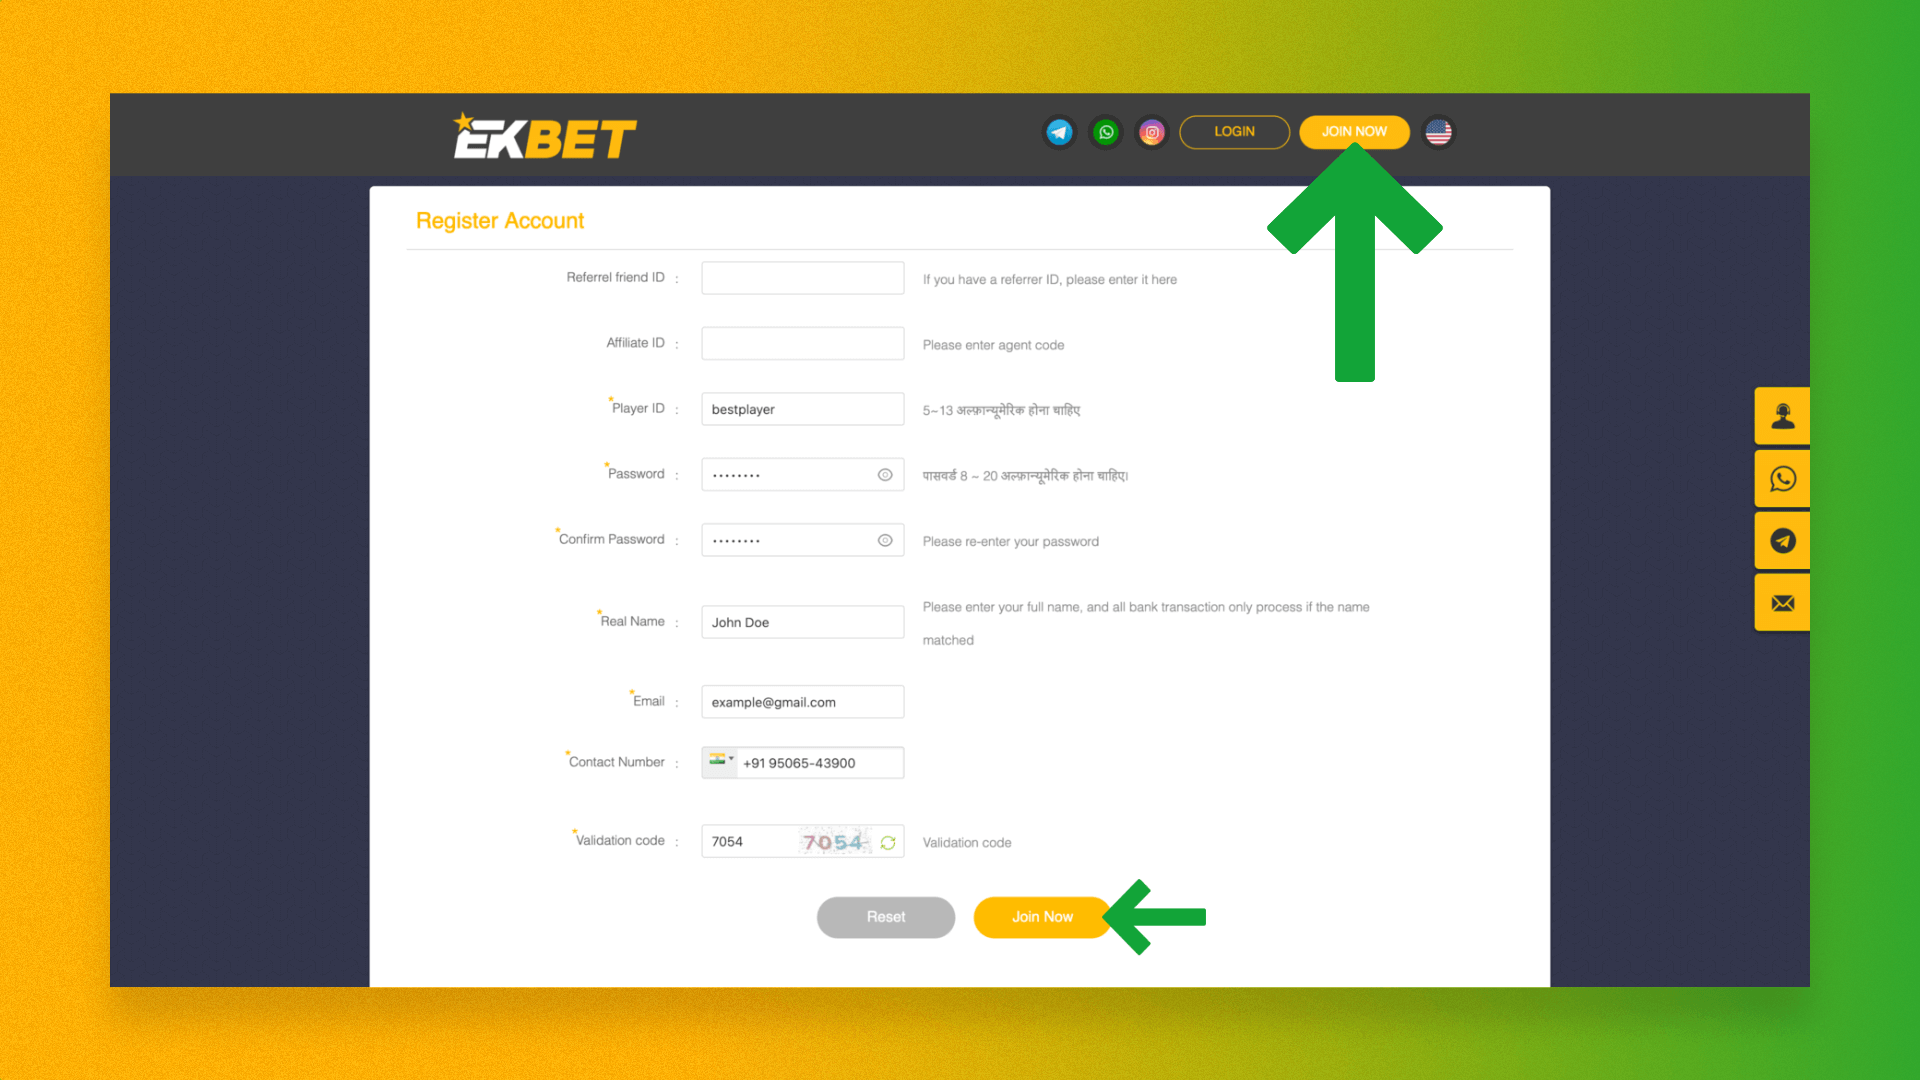 The registration process on Ekbet